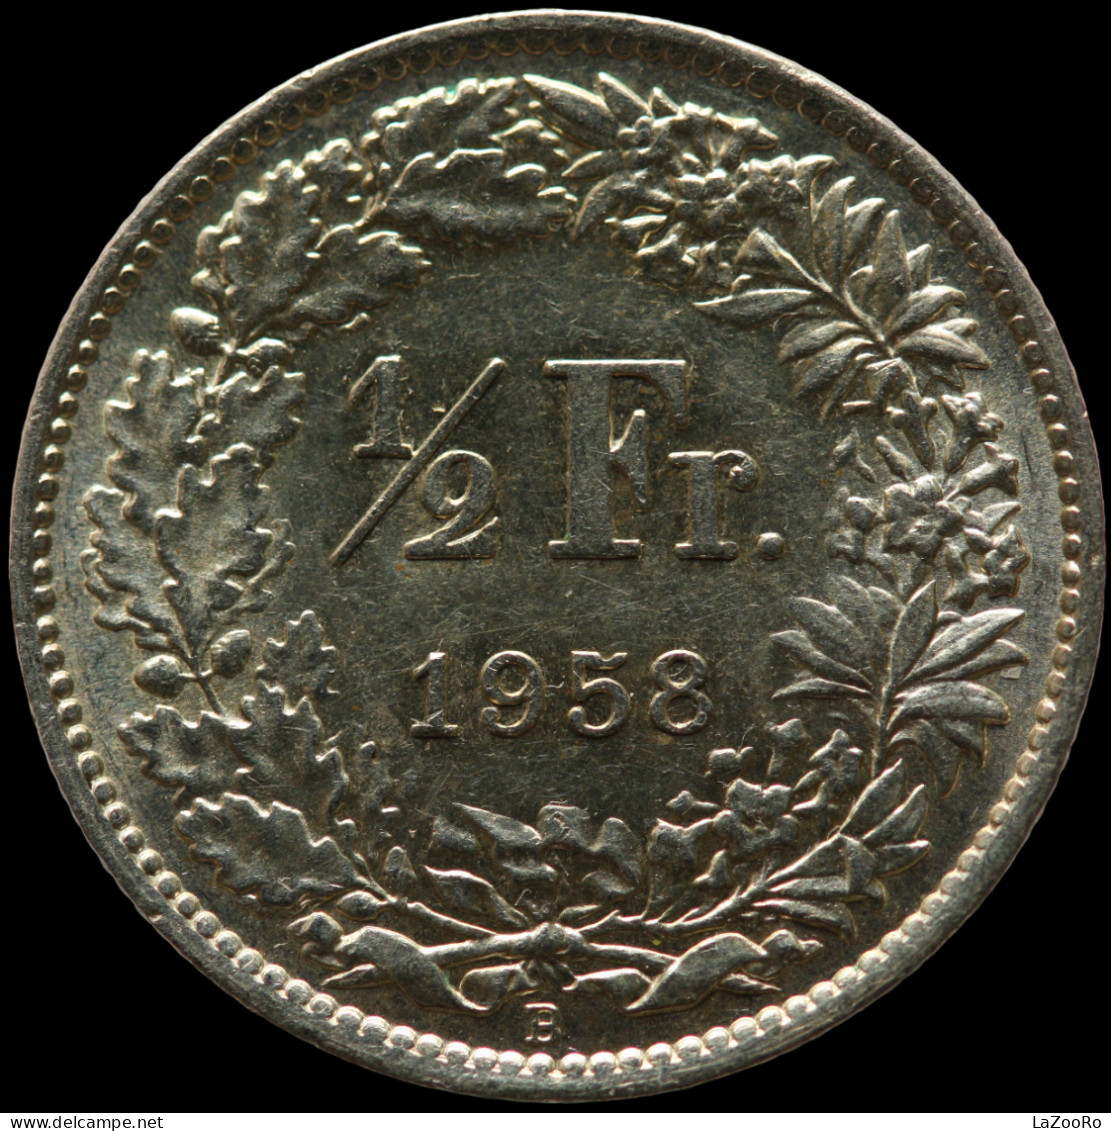 LaZooRo: Switzerland 1/2 Franc 1958 Specimen - Silver - Pruebas